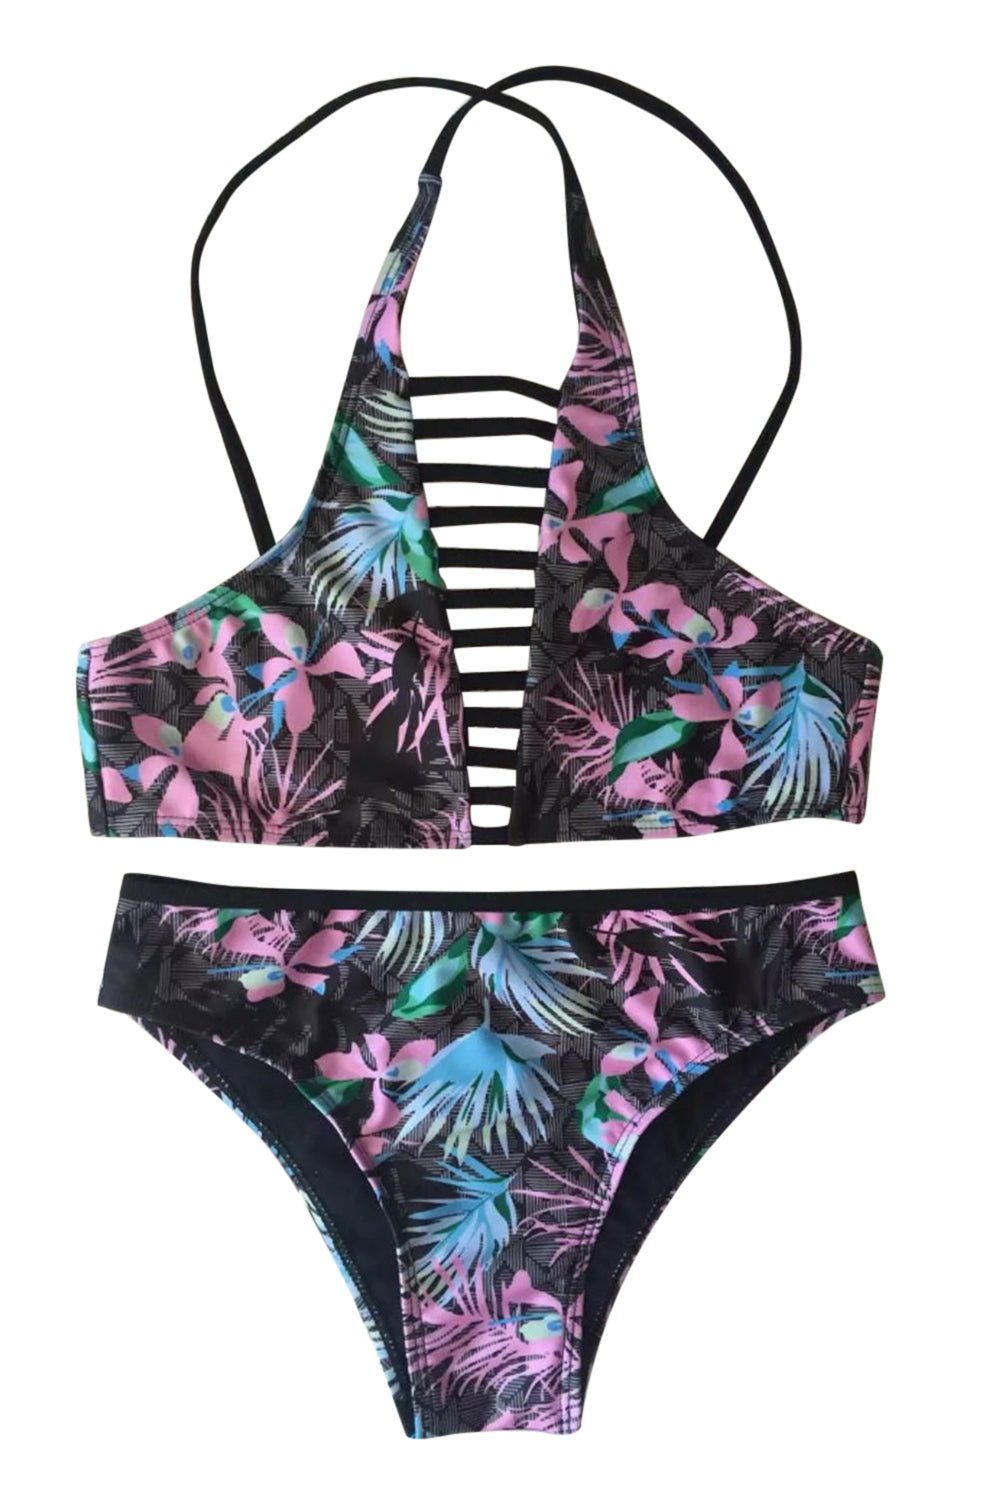 Iyasson Tropical Prints Mesh Bikini Set